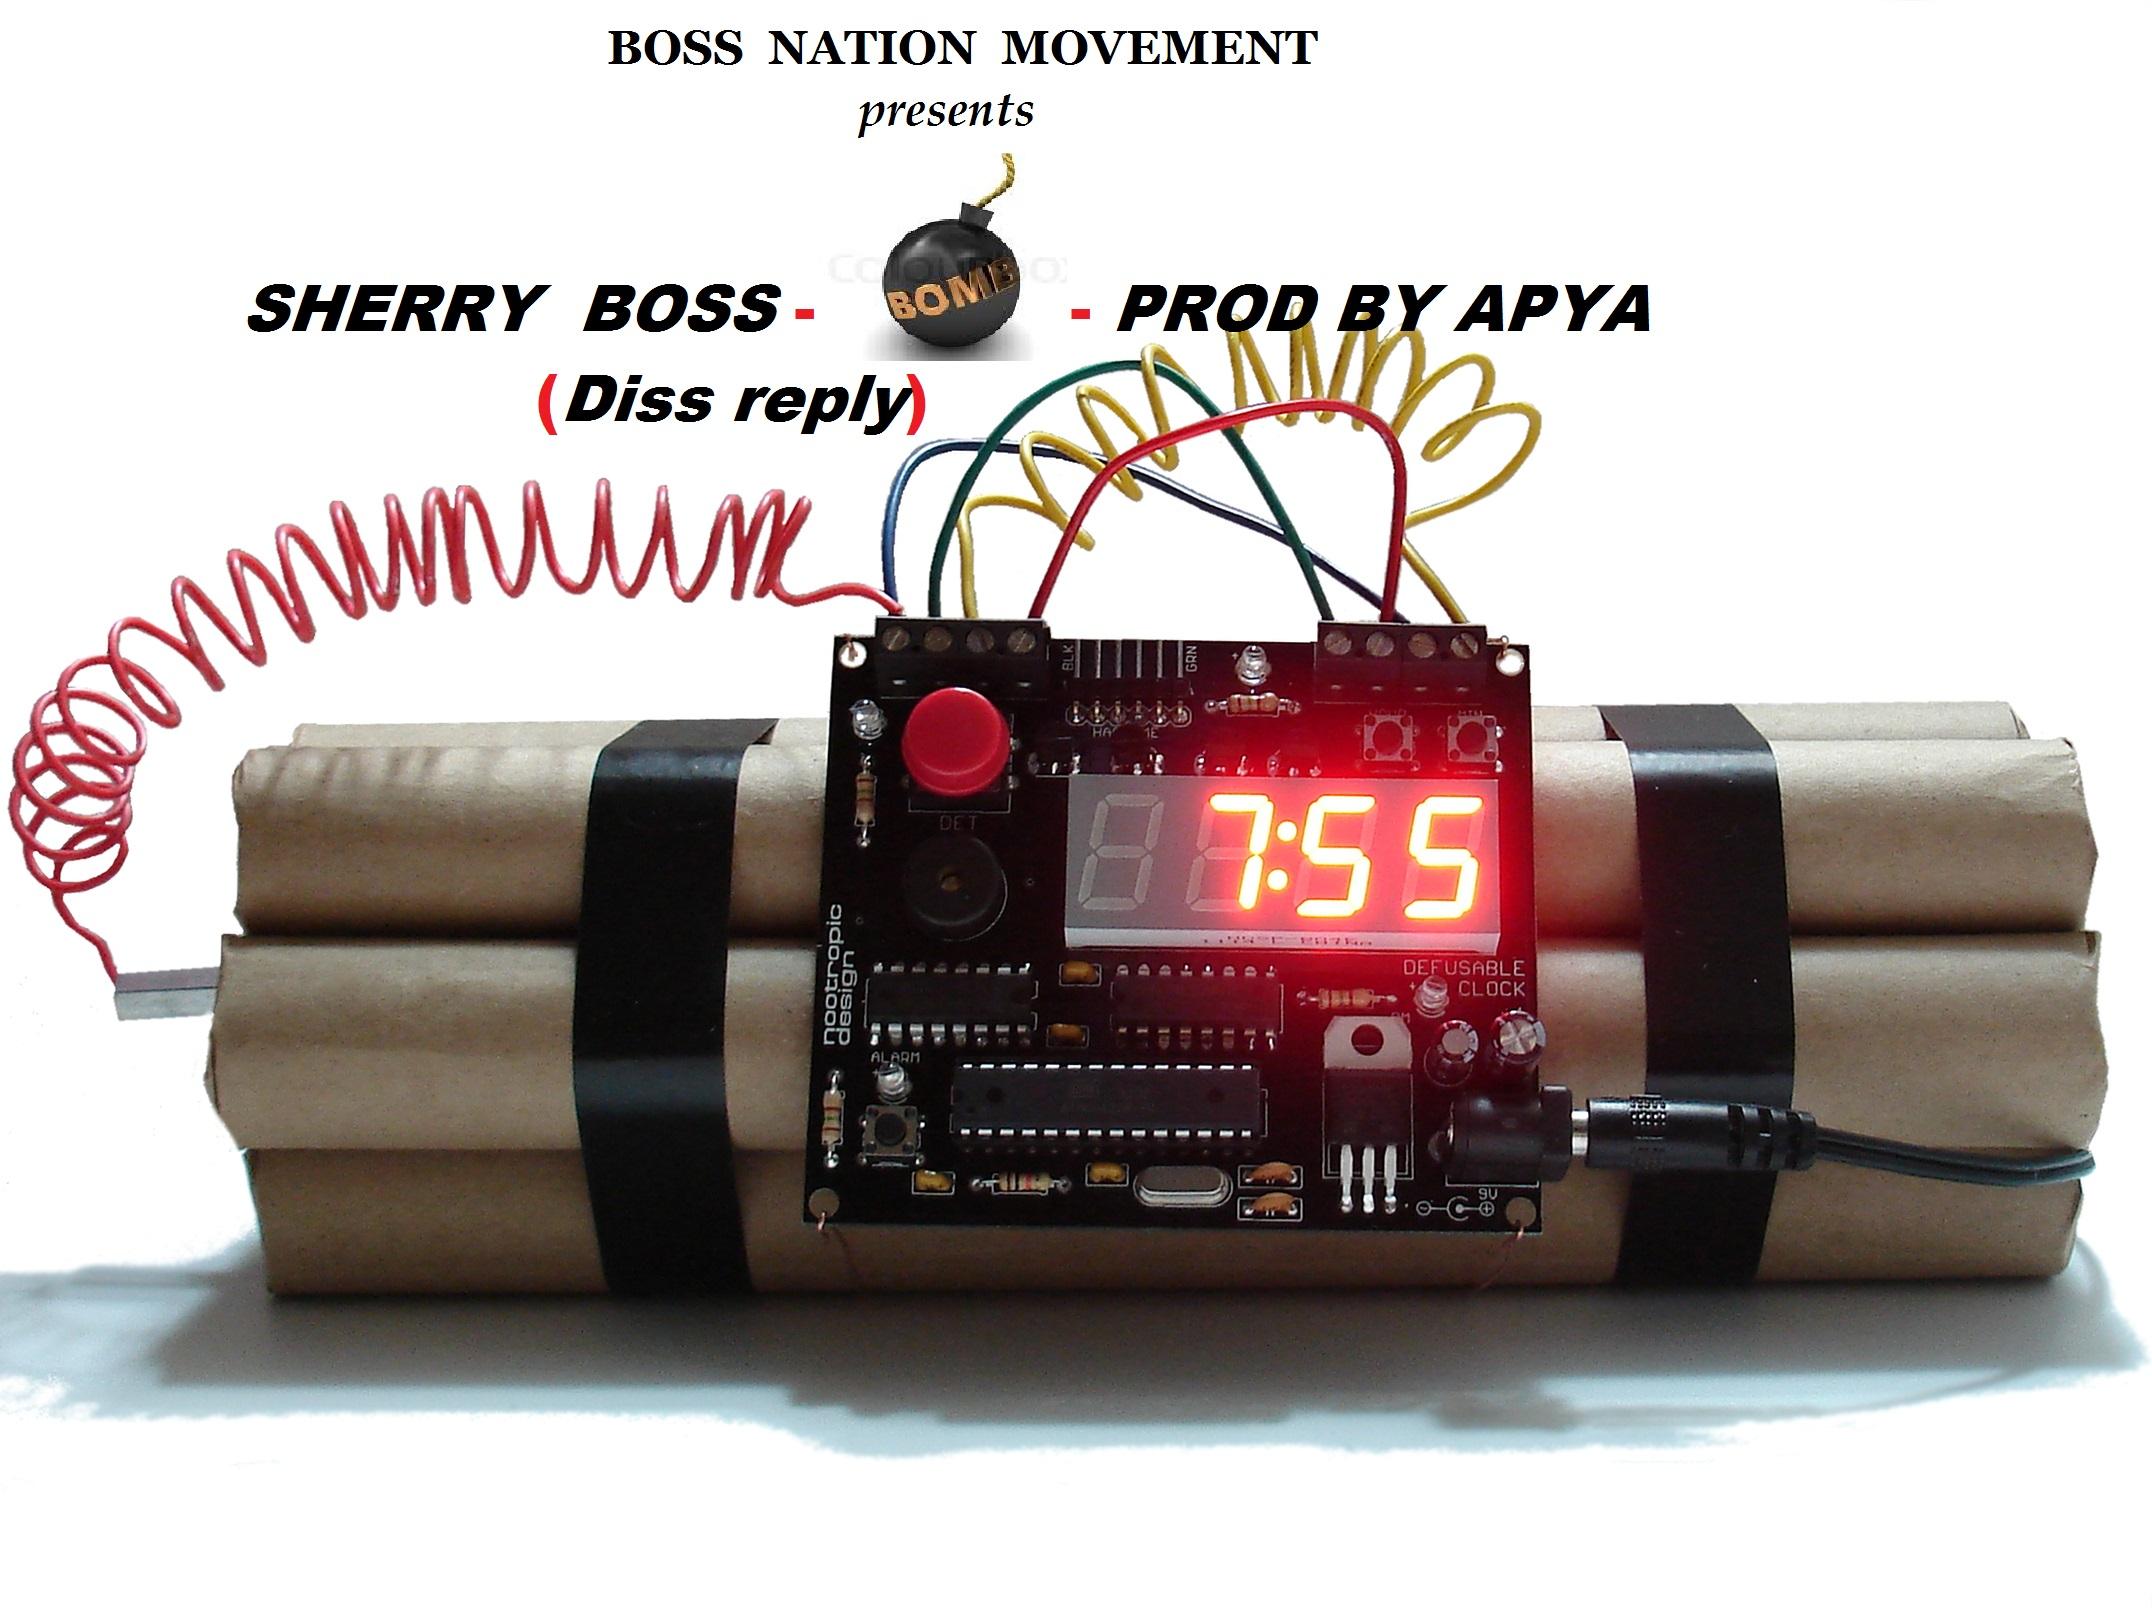 Sherry Boss – Bomb (Prod By Apya) (Nkansah Liwin Diss)